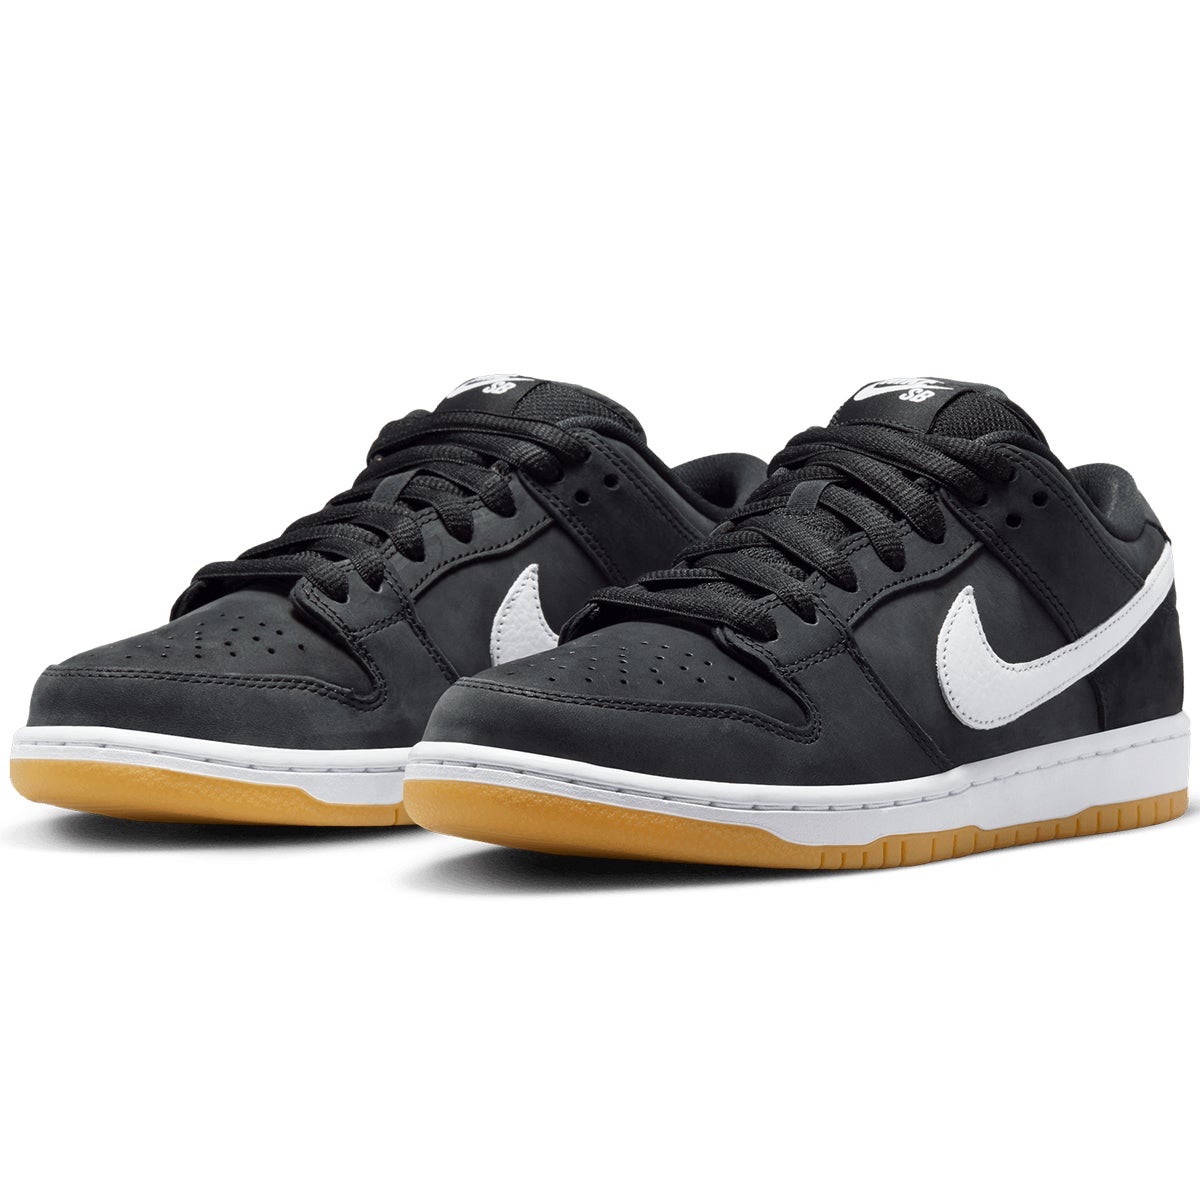 Nike SB Dunk Low Pro Shoe in Black/White/Gum